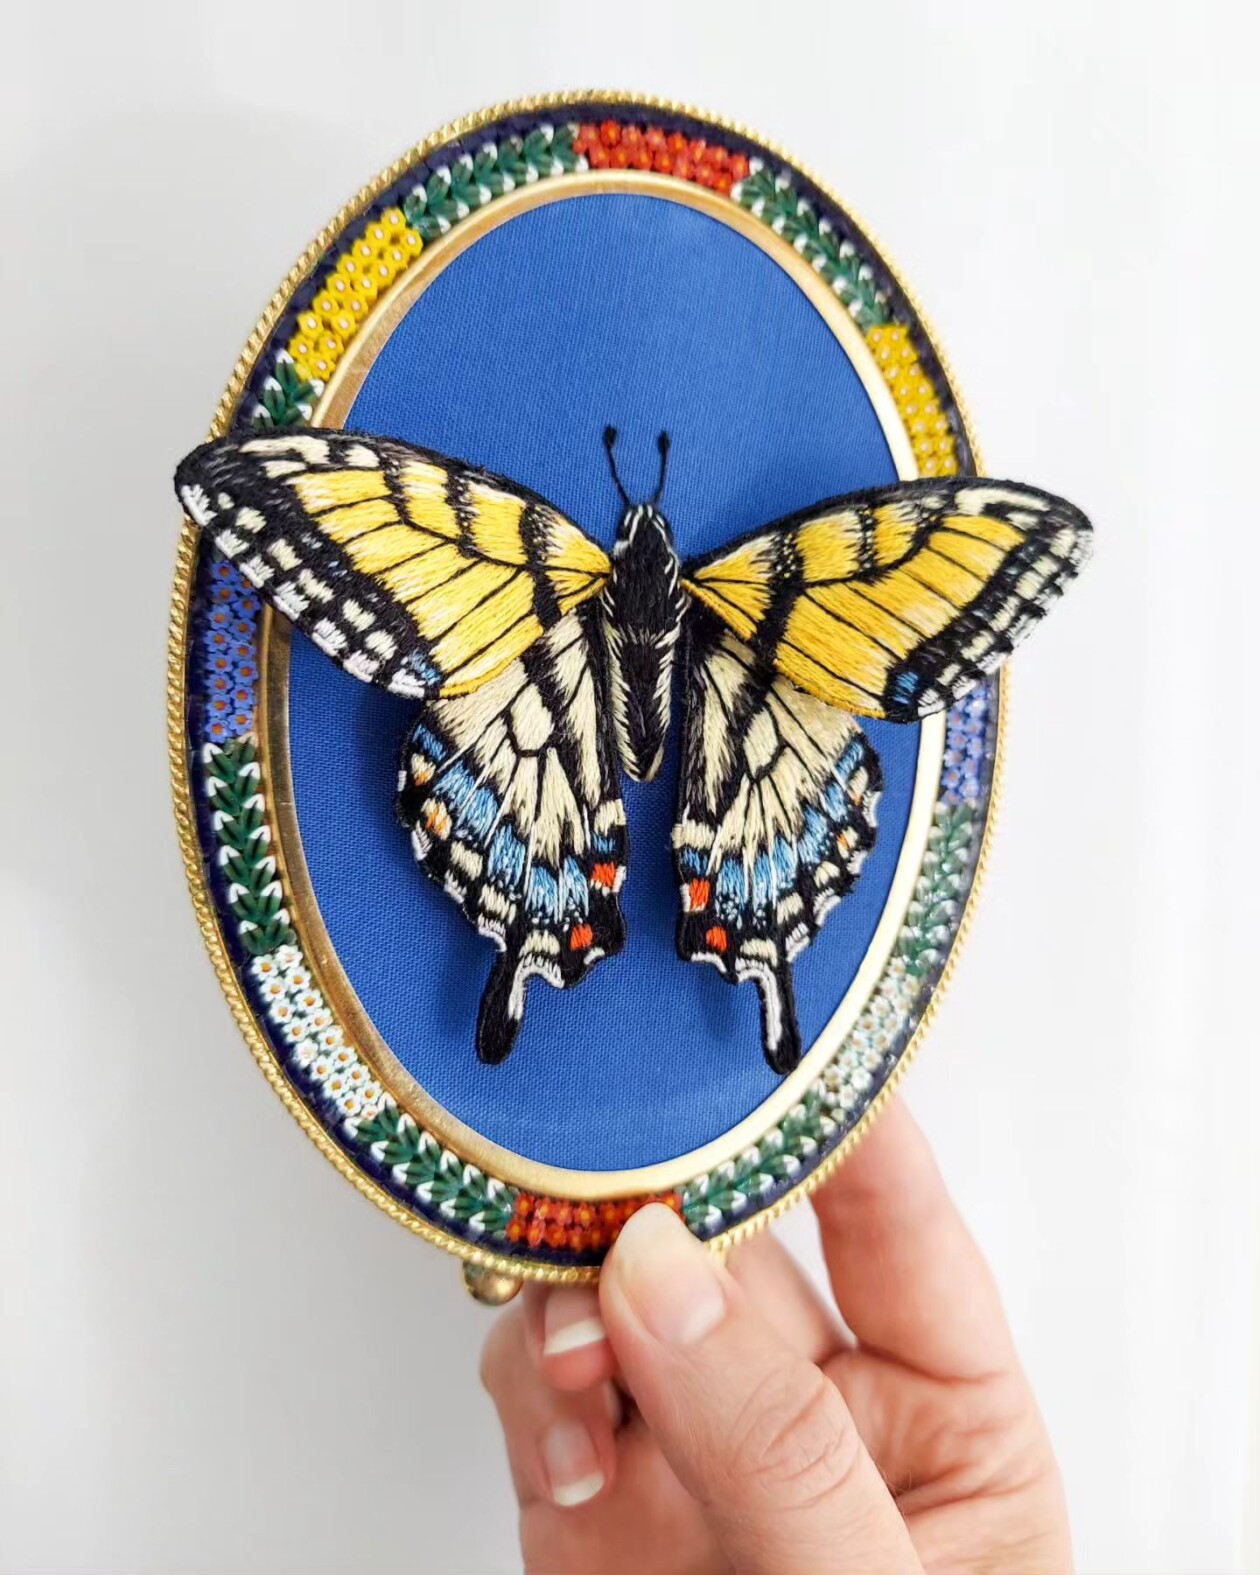 Life Like Three Dimensional Animal Embroideries By Megan Zaniewski (13)